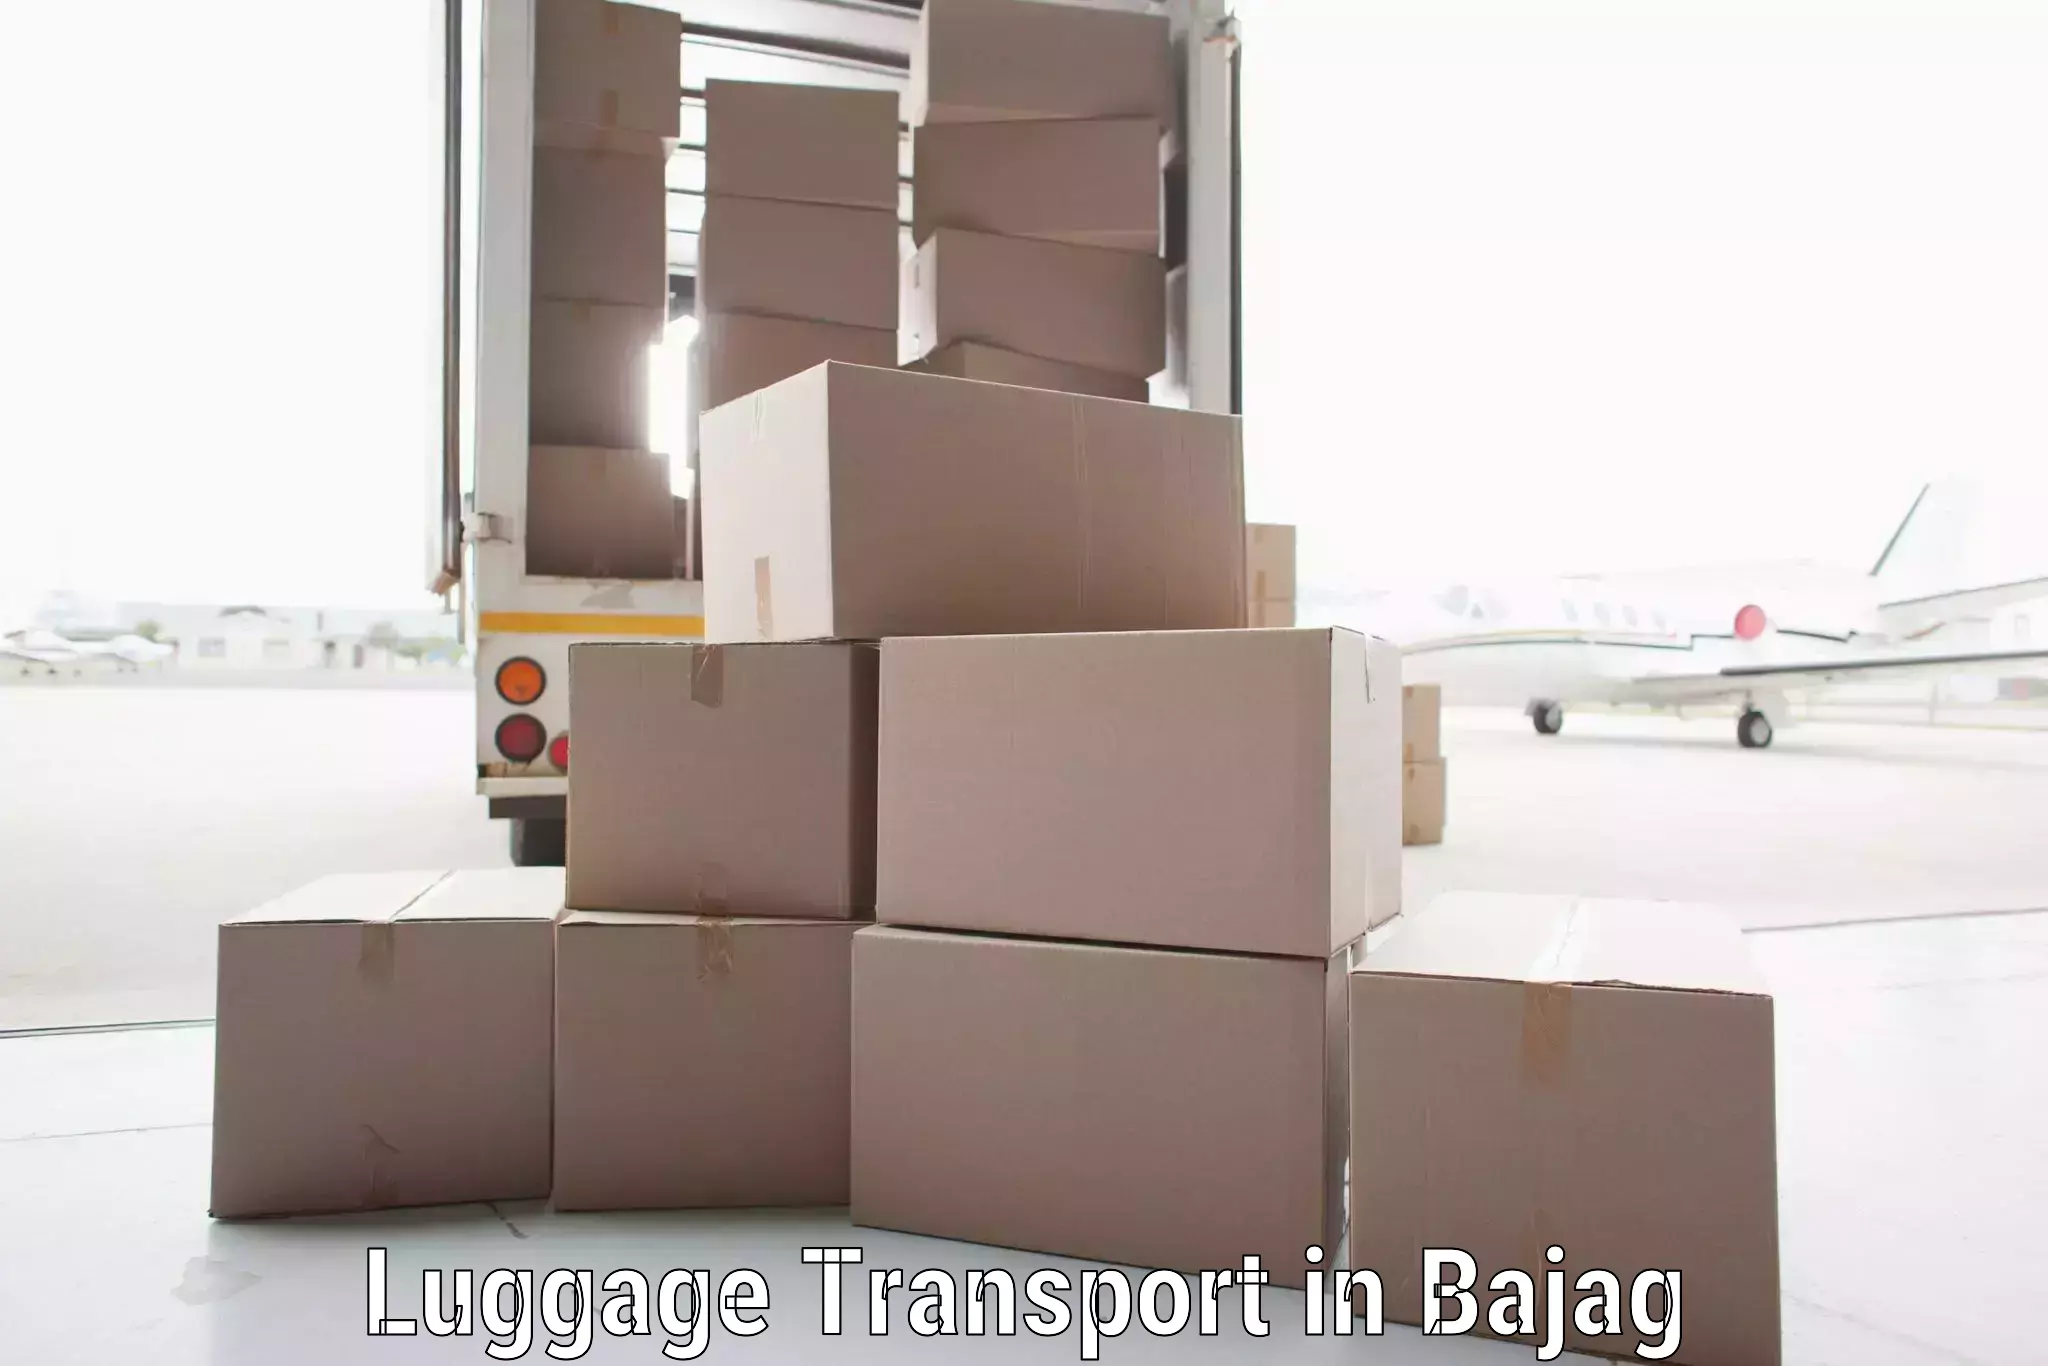 Baggage transport innovation in Bajag